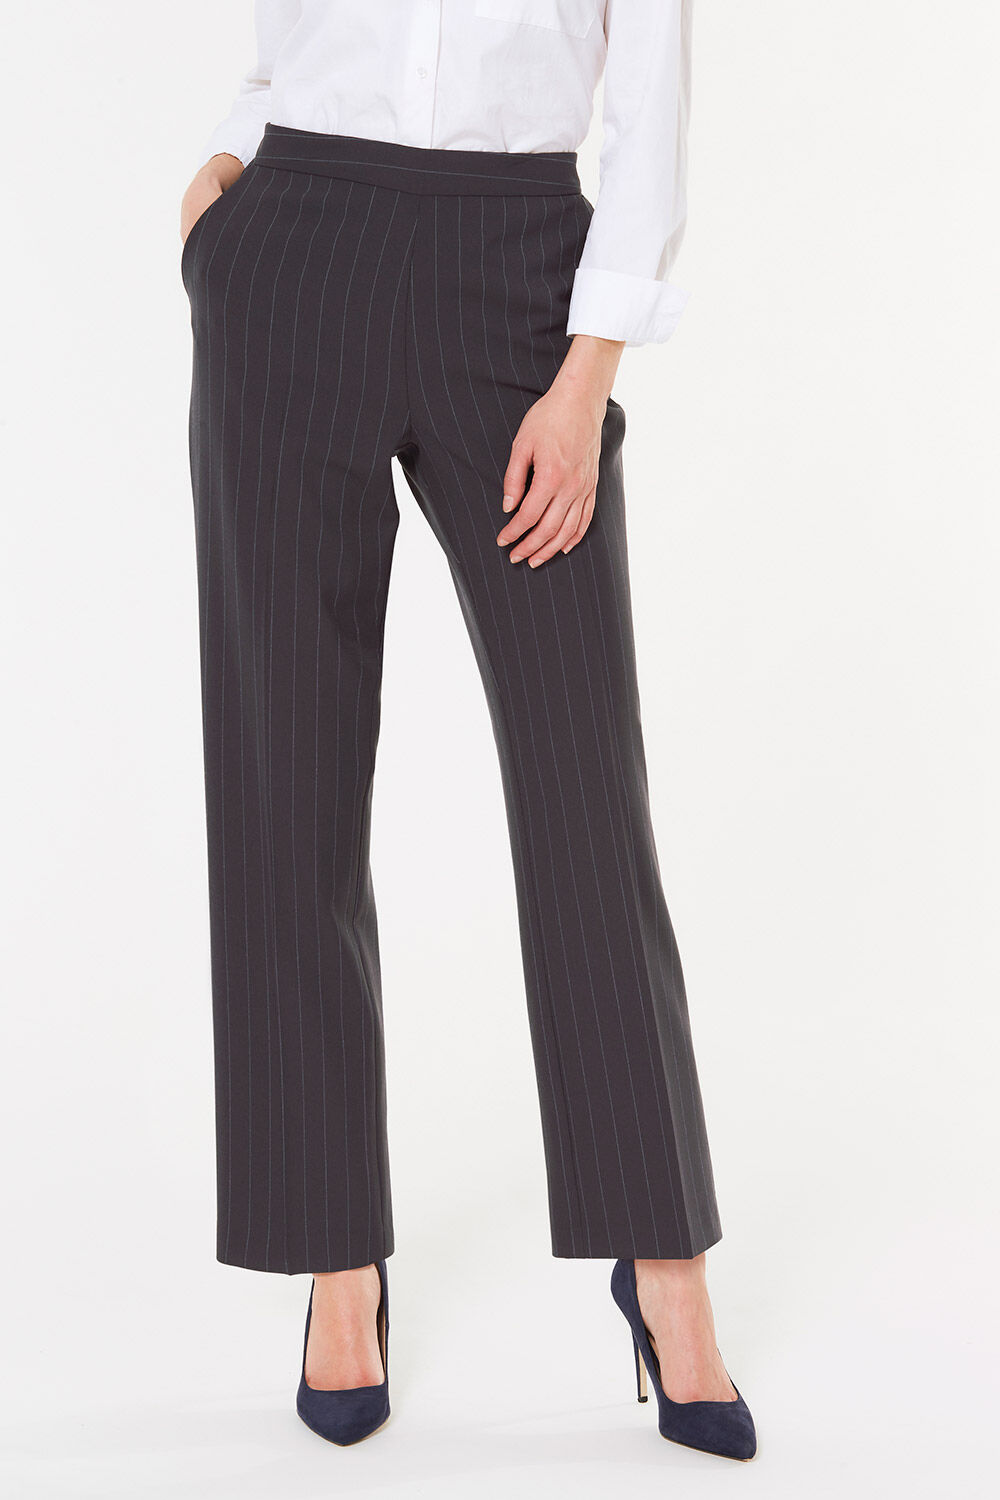 Bonmarche Workwear Classic Straight Leg Stripe Pull On Trouser - Navy, Size: 22